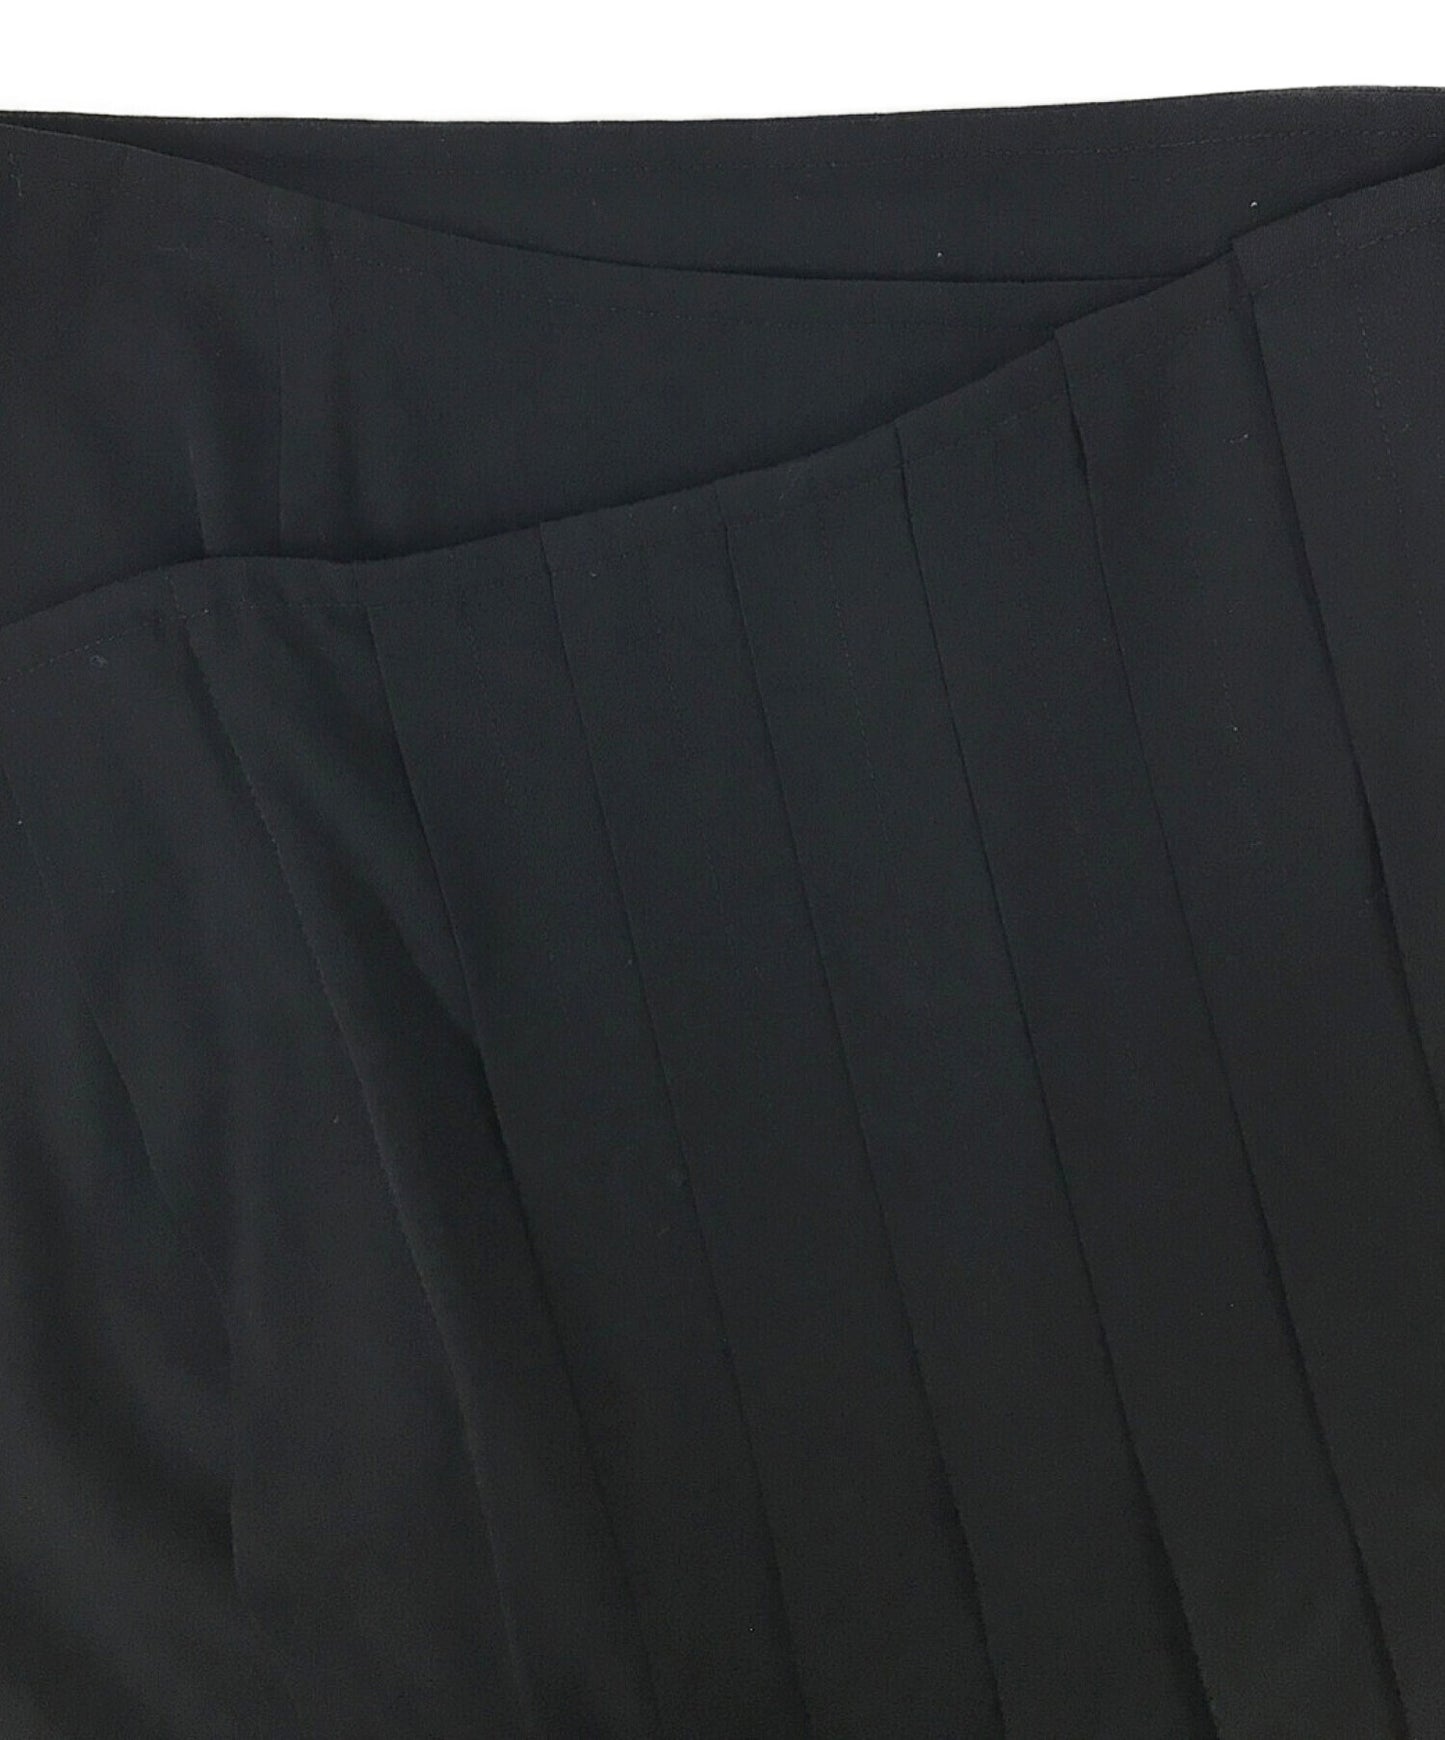 [Pre-owned] Y's Wool gabardine wrap long skirt YZ-S08-100